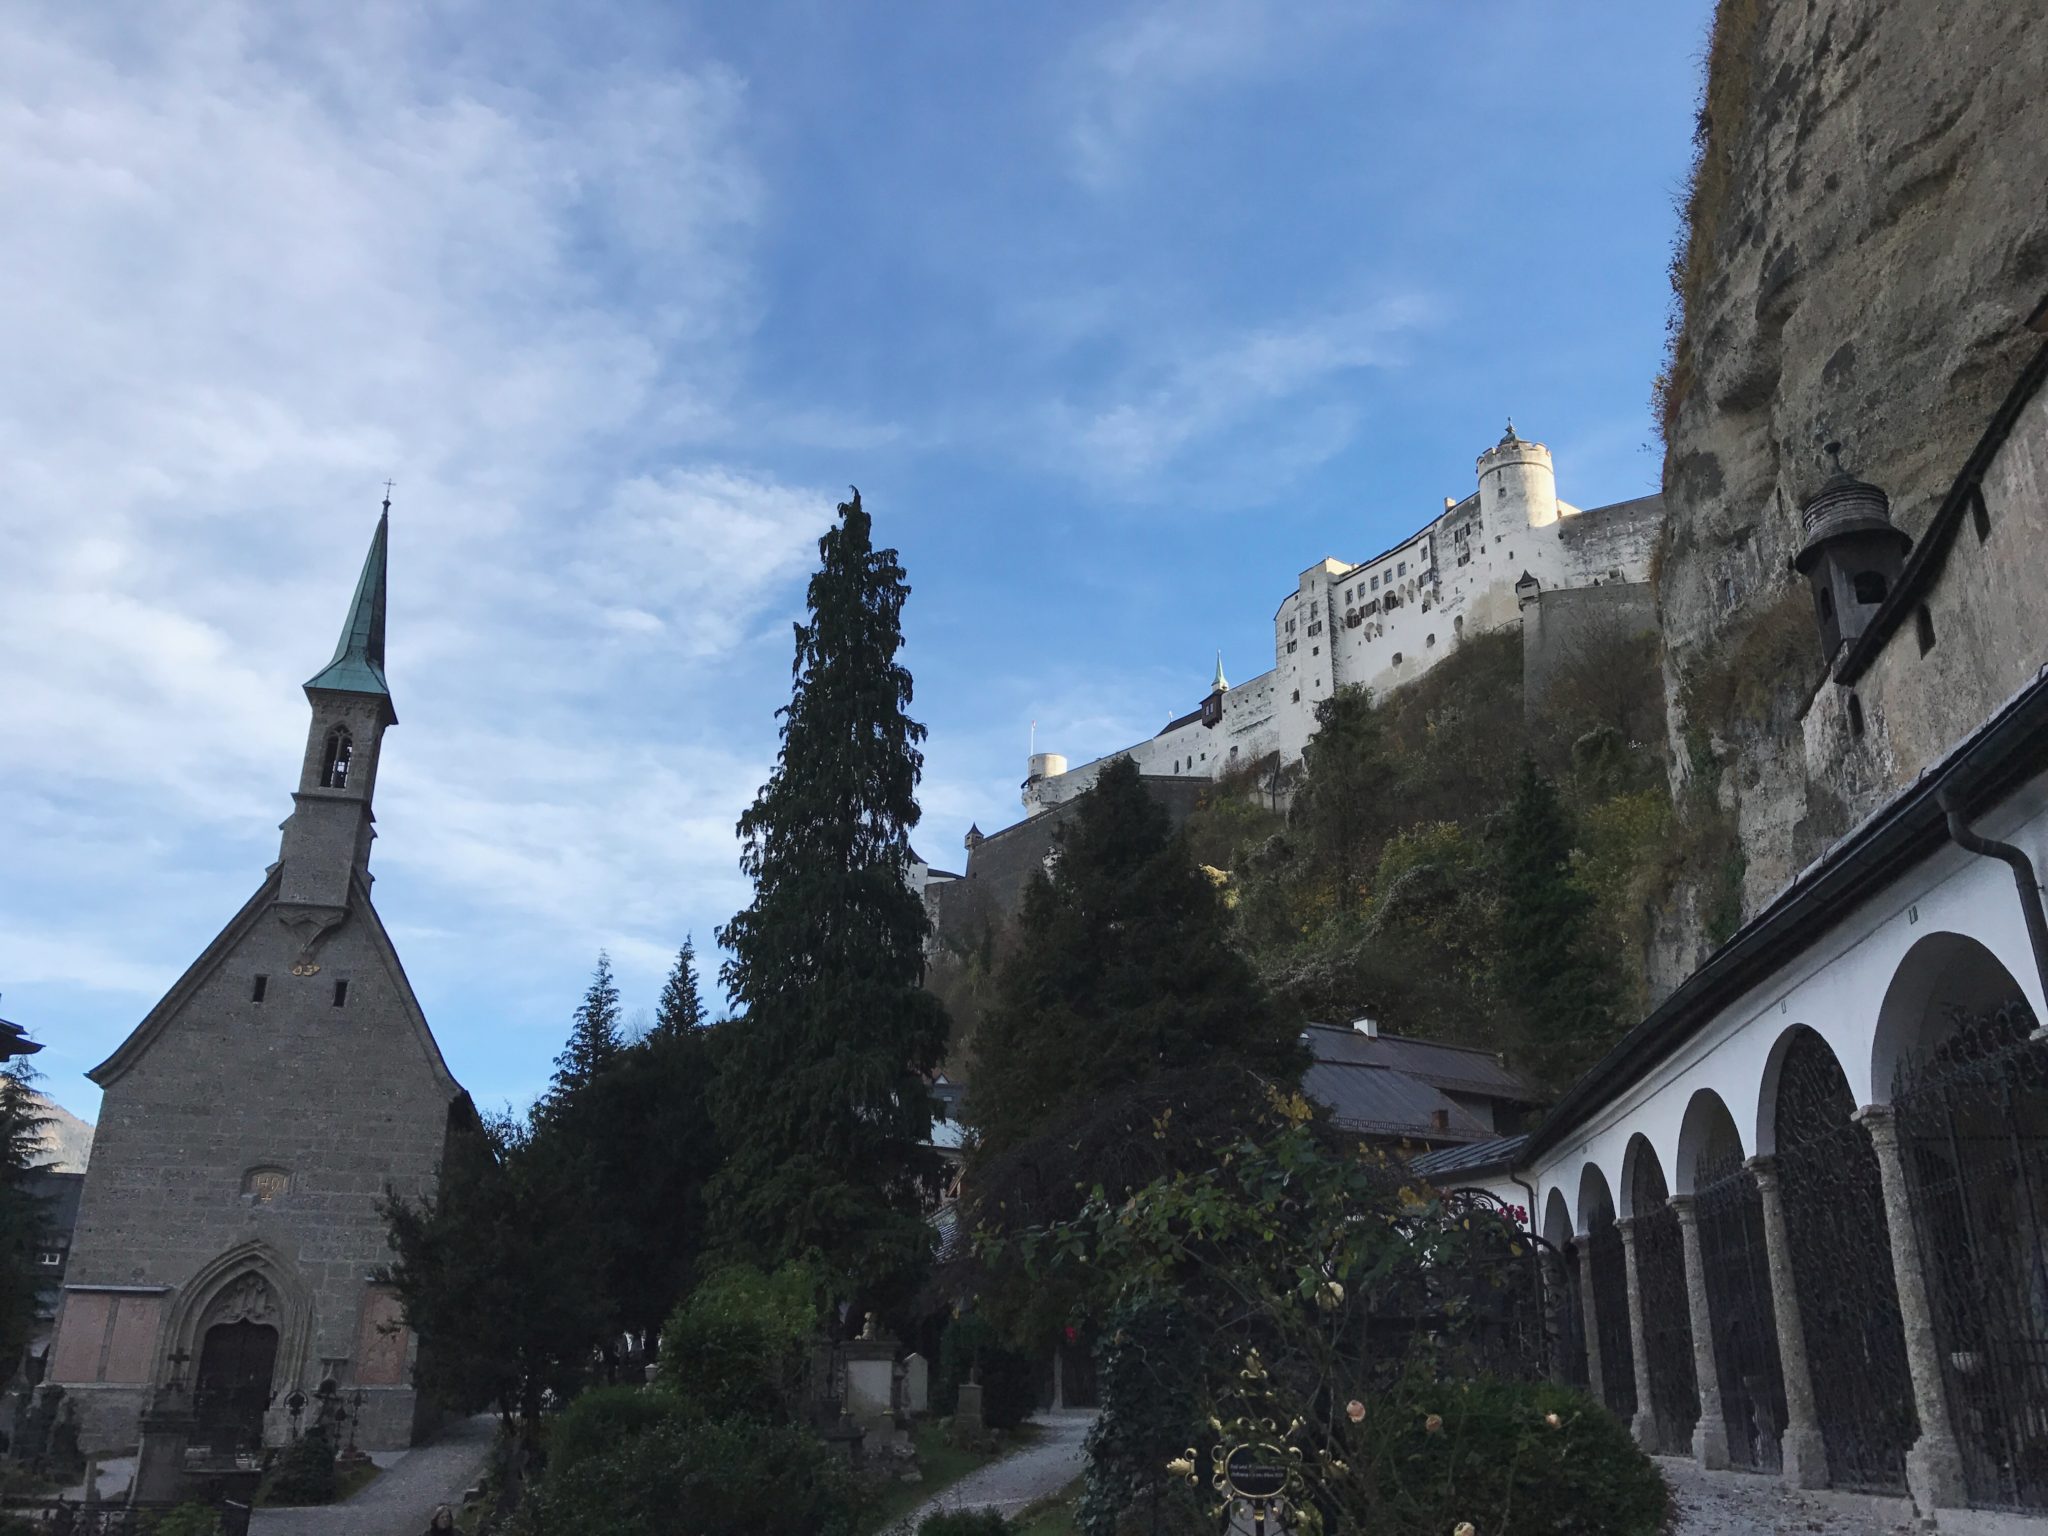  St. Peter’s Abbey in Salzburg